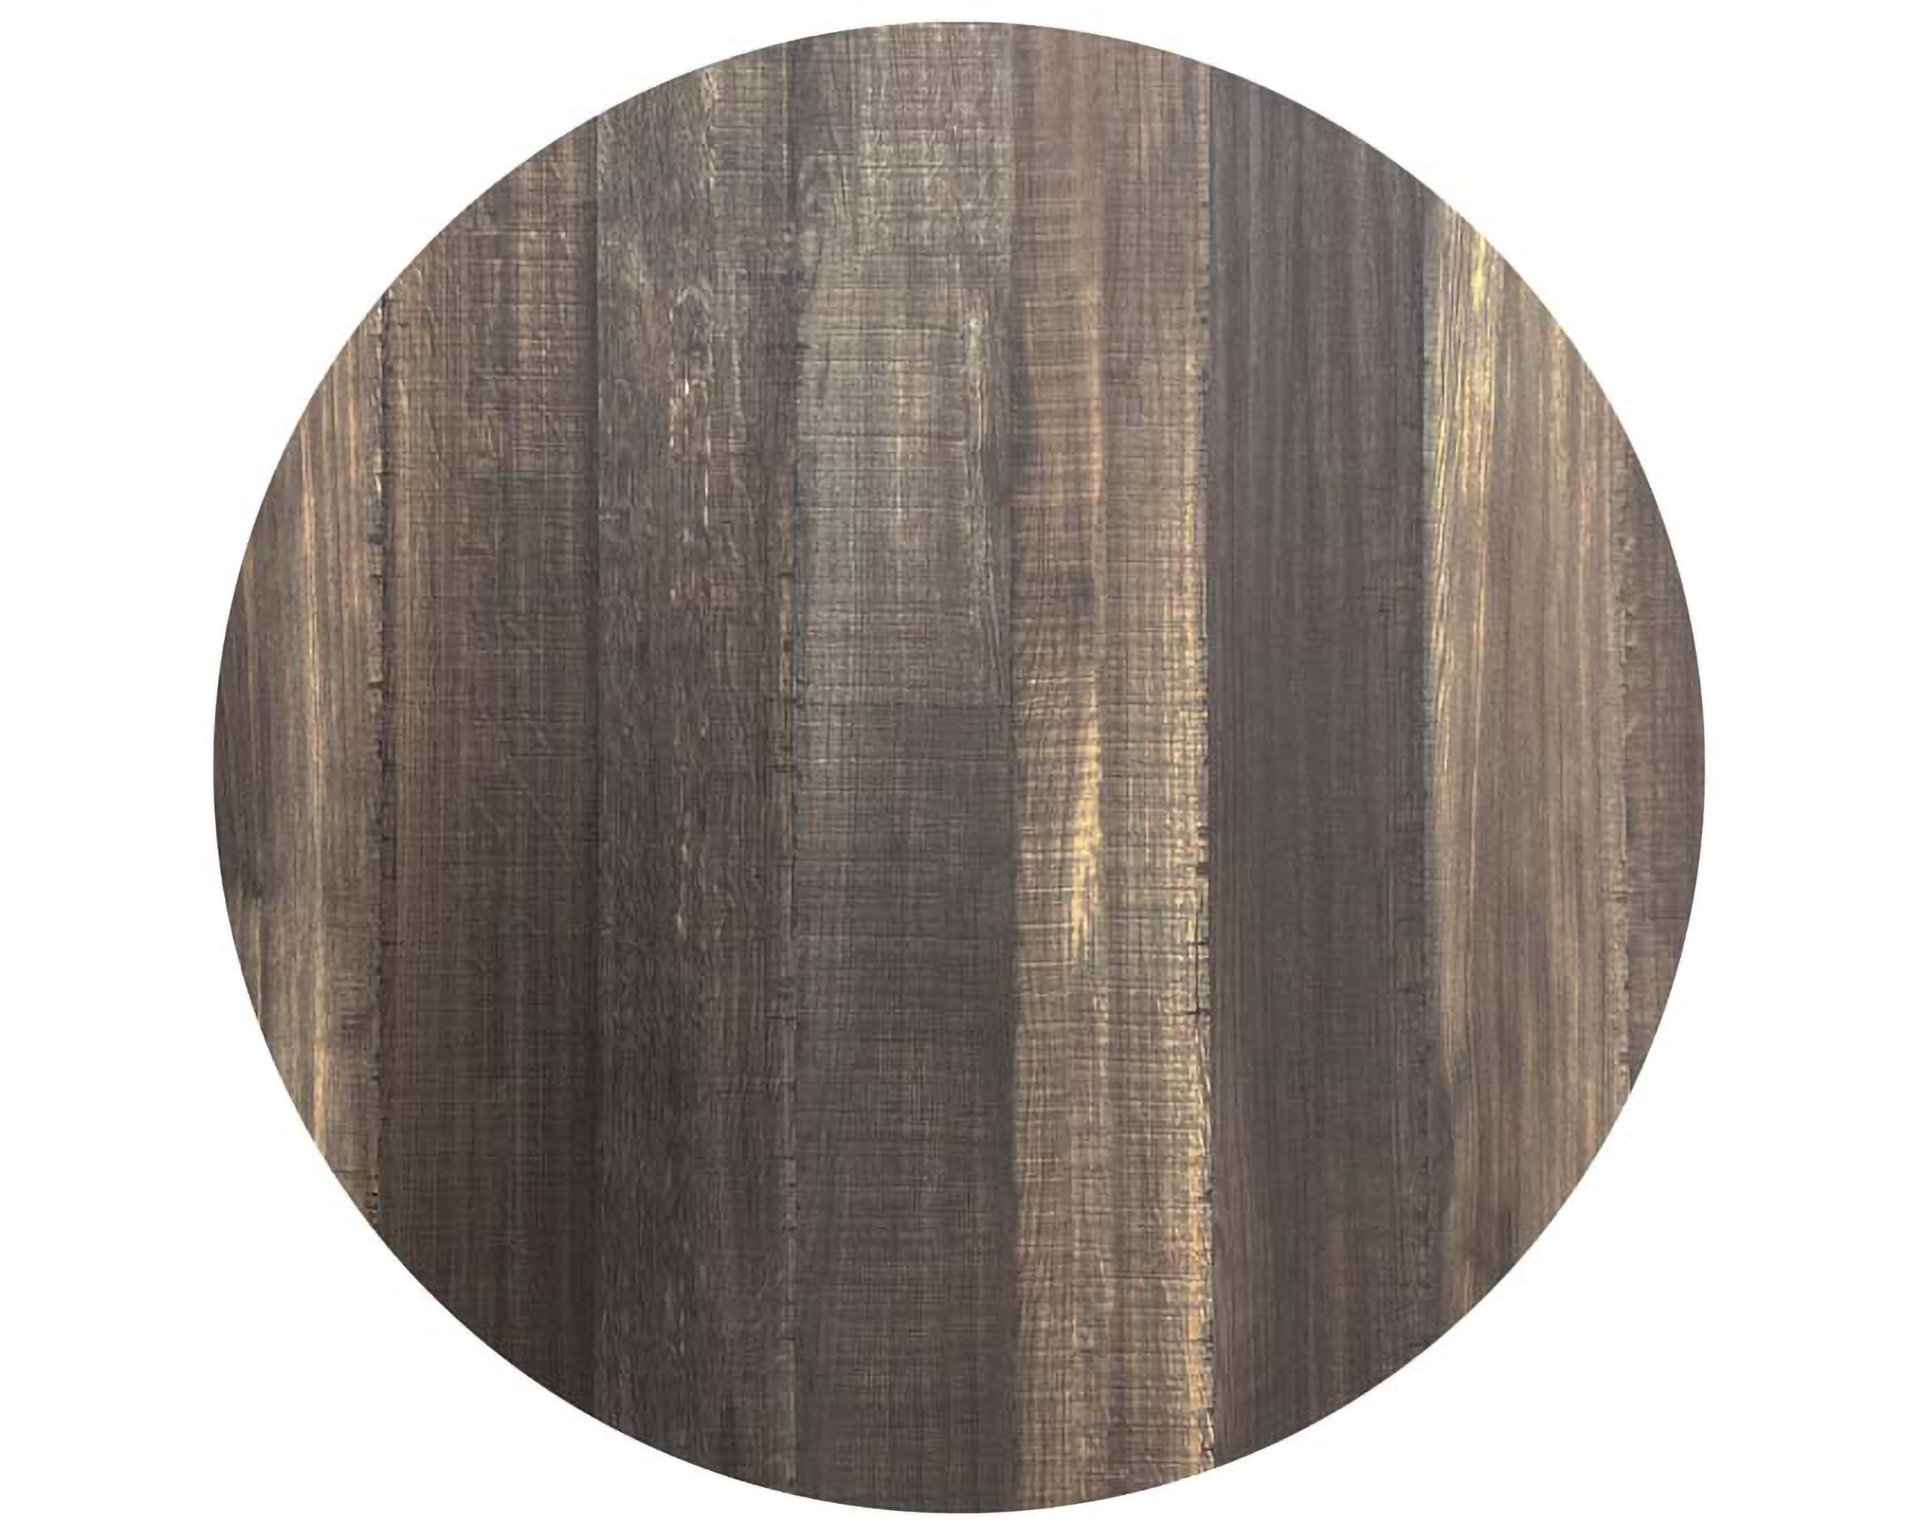 X Cross terrastafel grijs frame + Tropical Wood HPL tafelblad tafelblad Ø70cm